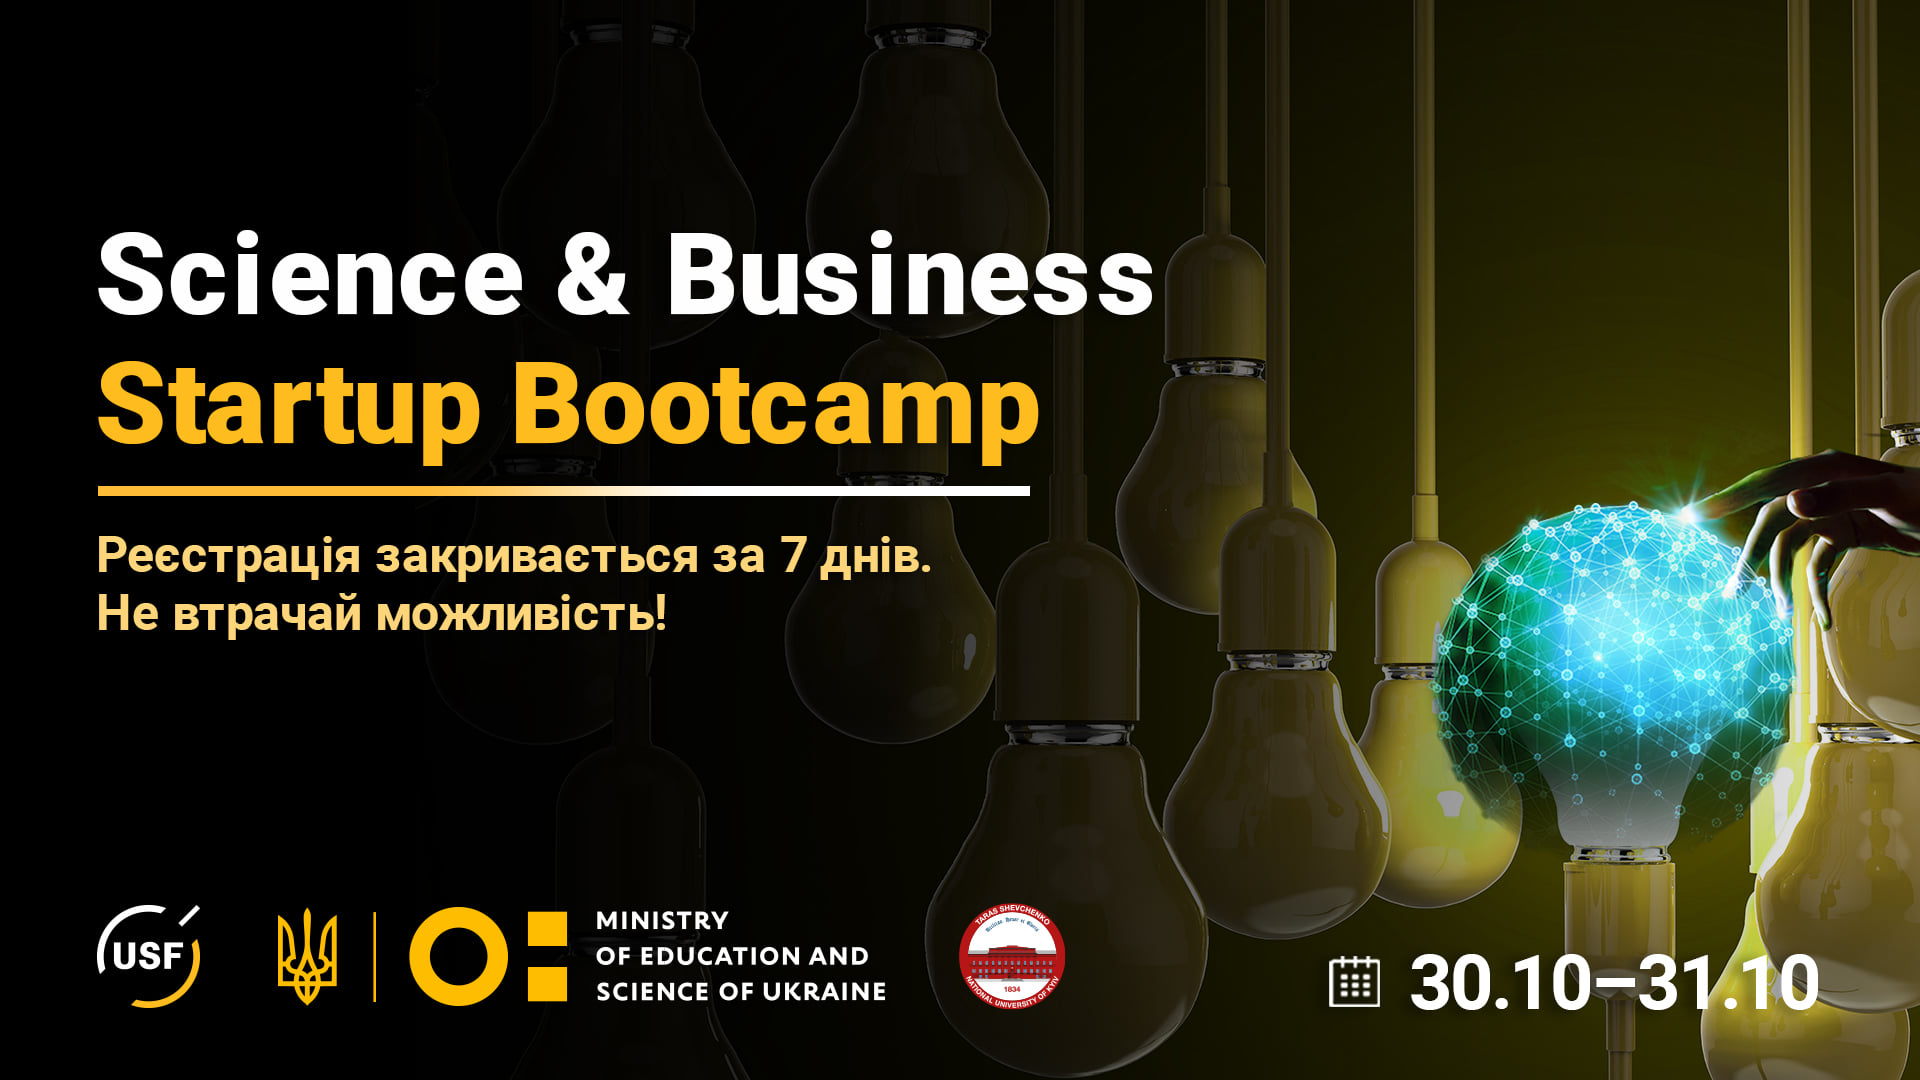 Sсience & Business StartupBootcamp